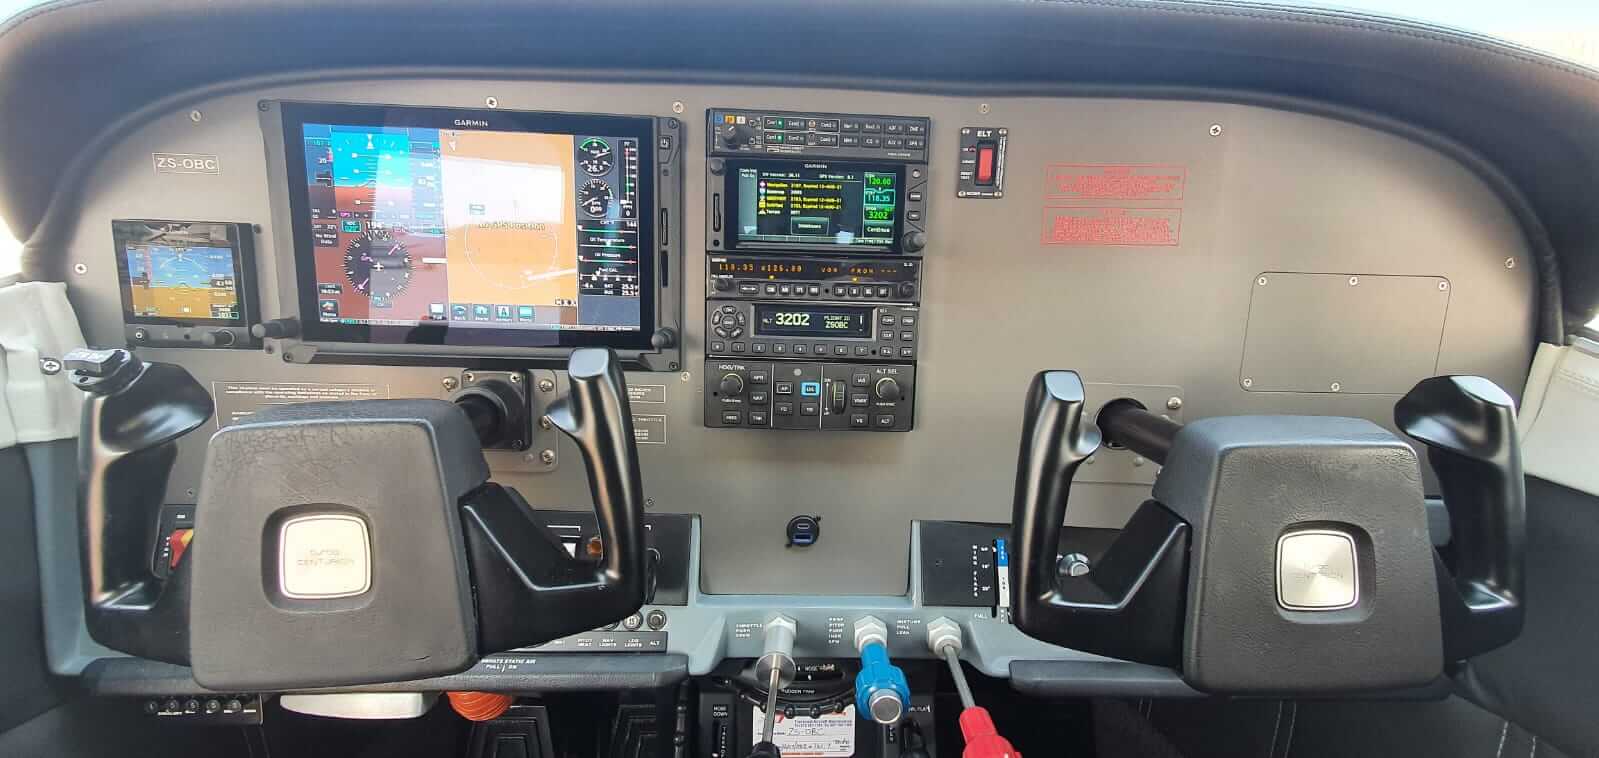 Install Garmin G5 Standby, G500TXi Flight Deck with Engine Indication, GTN650Xi NAV/COM/GPS, GTX345 ADS-B in/out Transponder, GSB15 USB and GFC500 Autopilot System in a Cessna 210.